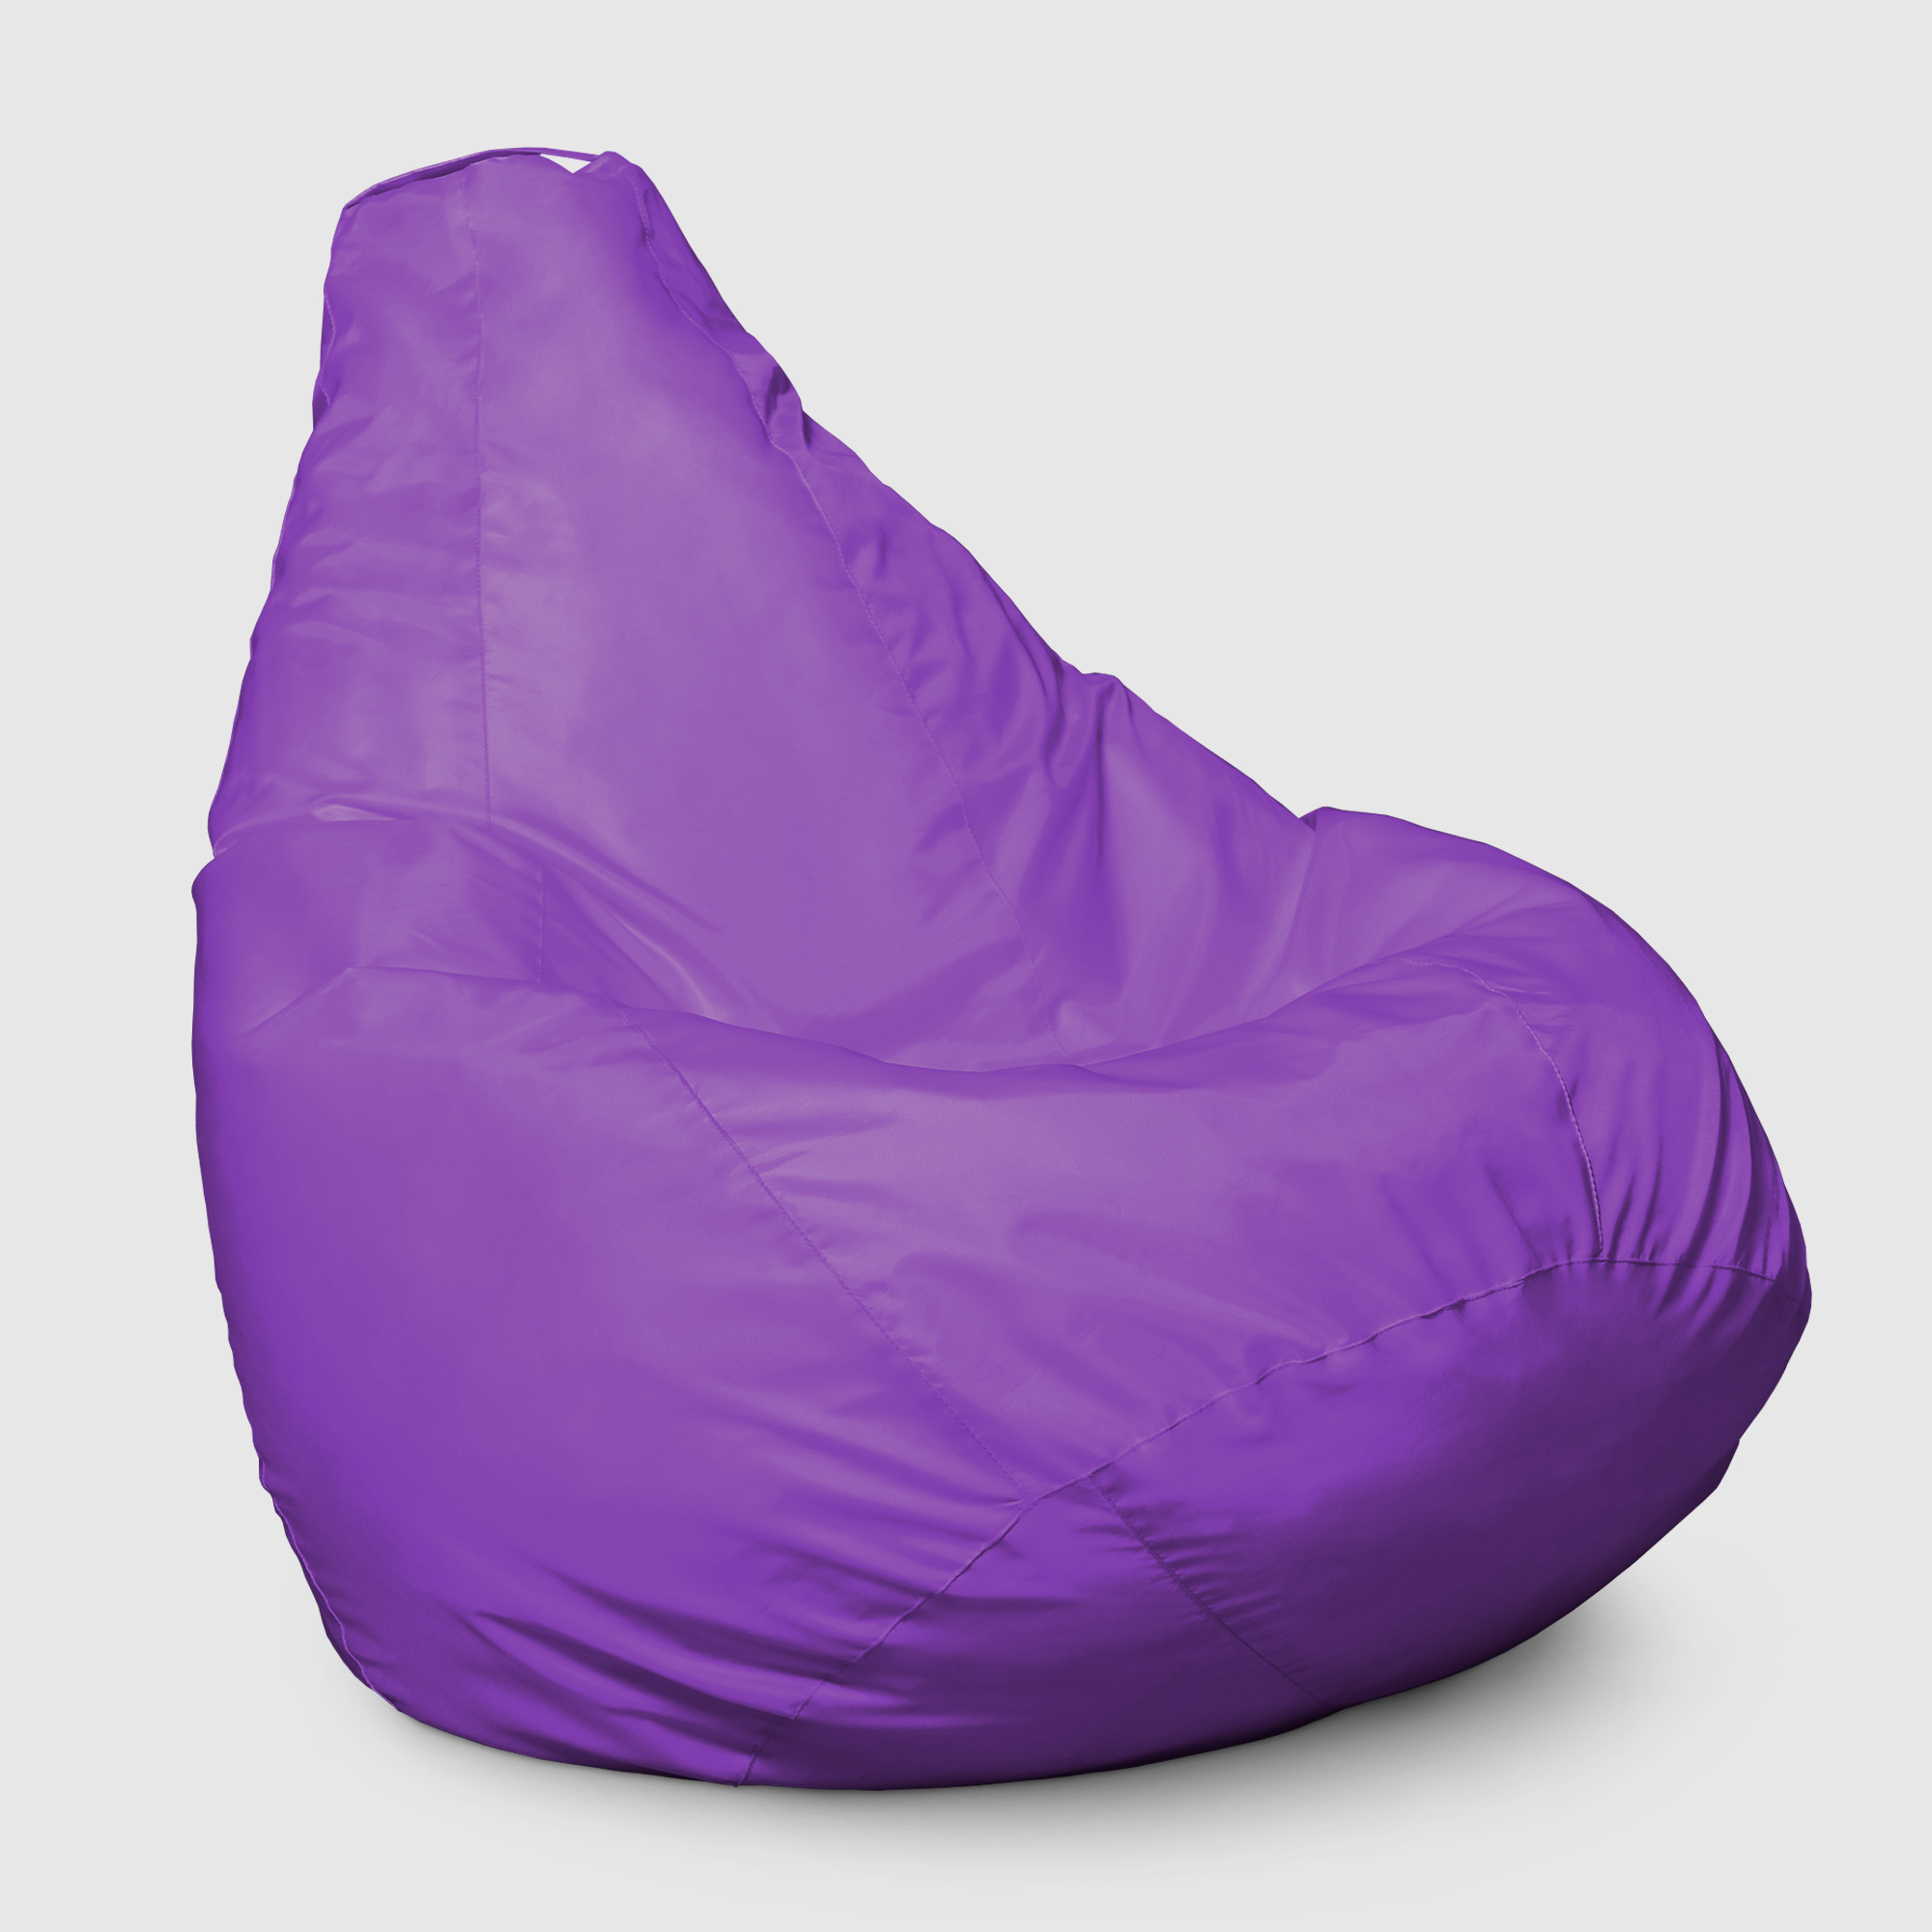 Кресло мешок Dreambag Меган xl фиолетовое 85х85х125 см кресло мешок dreambag меган xl лайм 85х85х125см